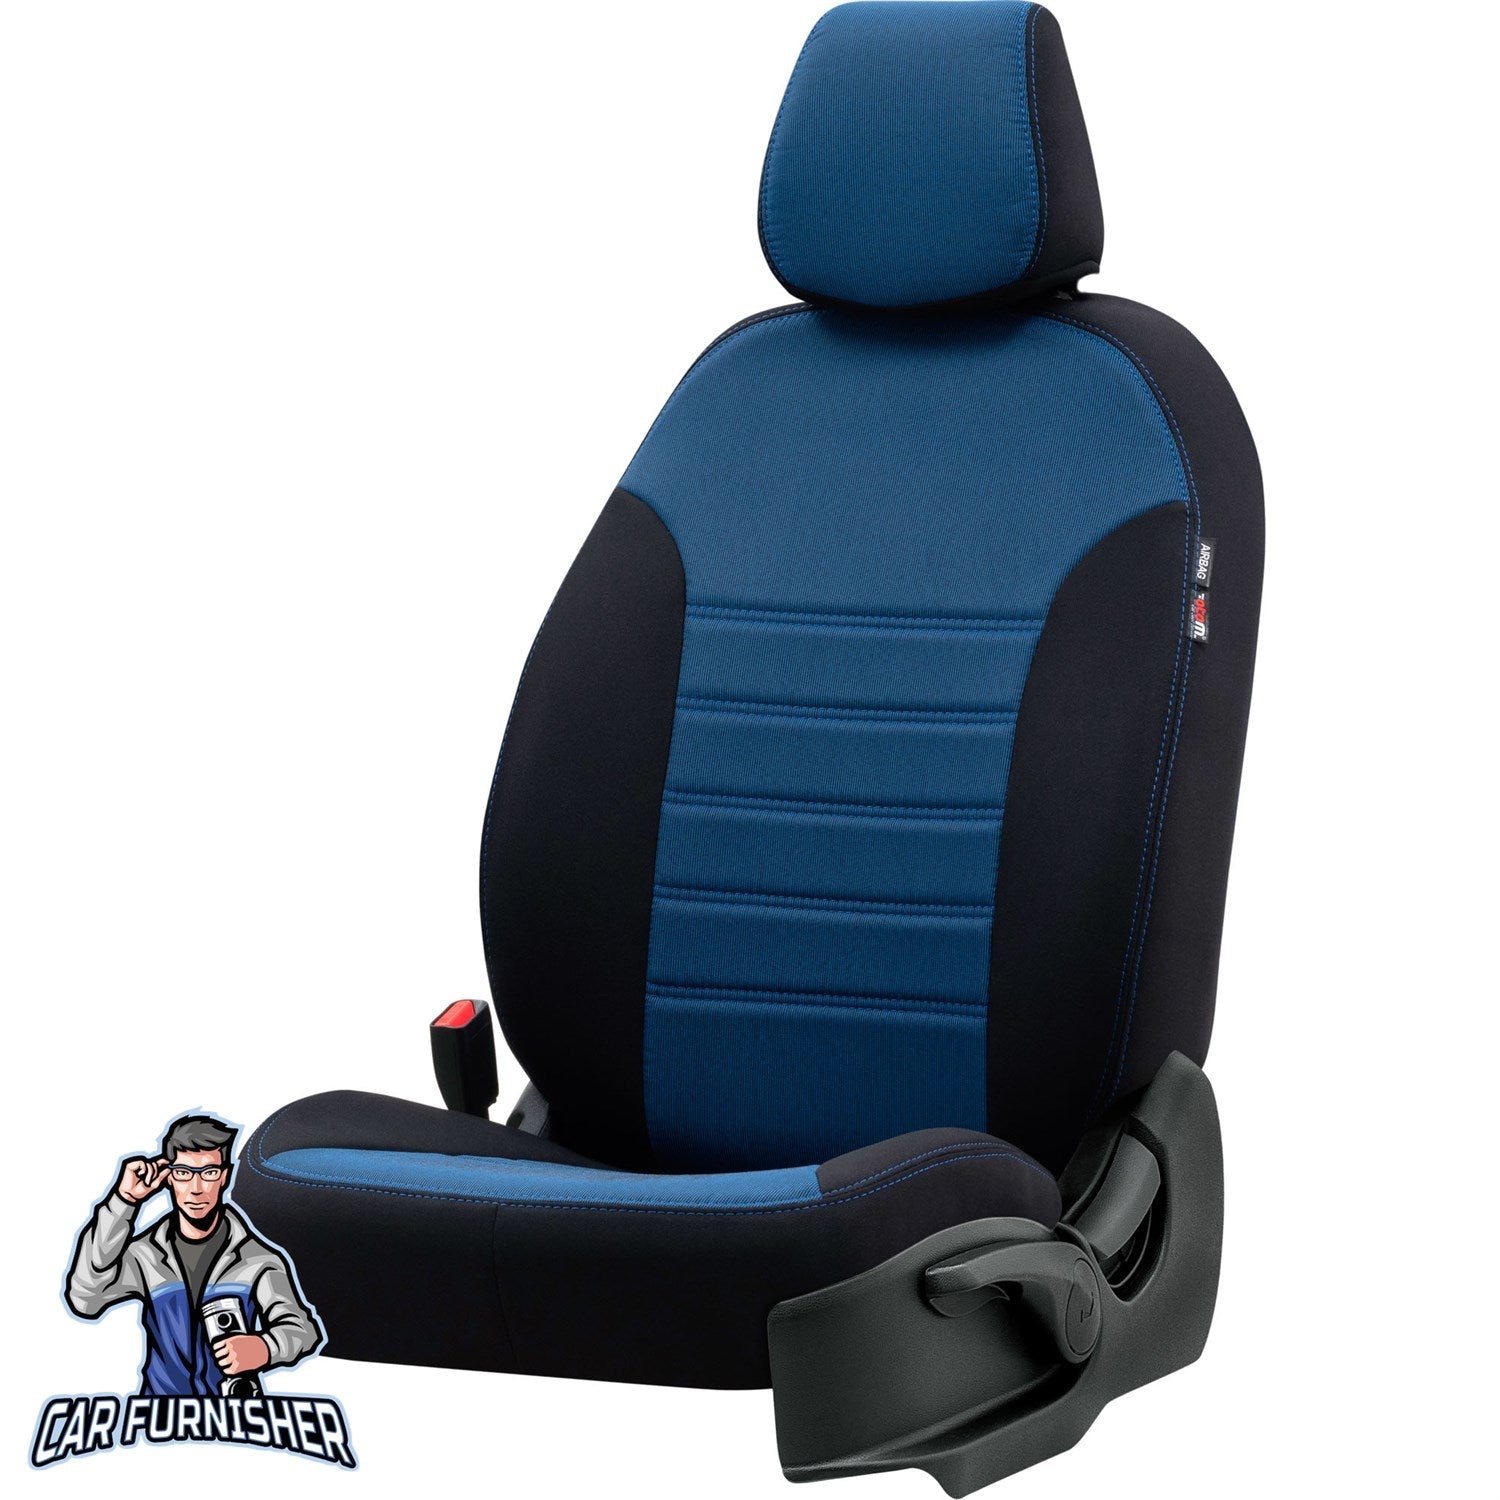 Mini Cooper Seat Covers Original Jacquard Design Blue Jacquard Fabric